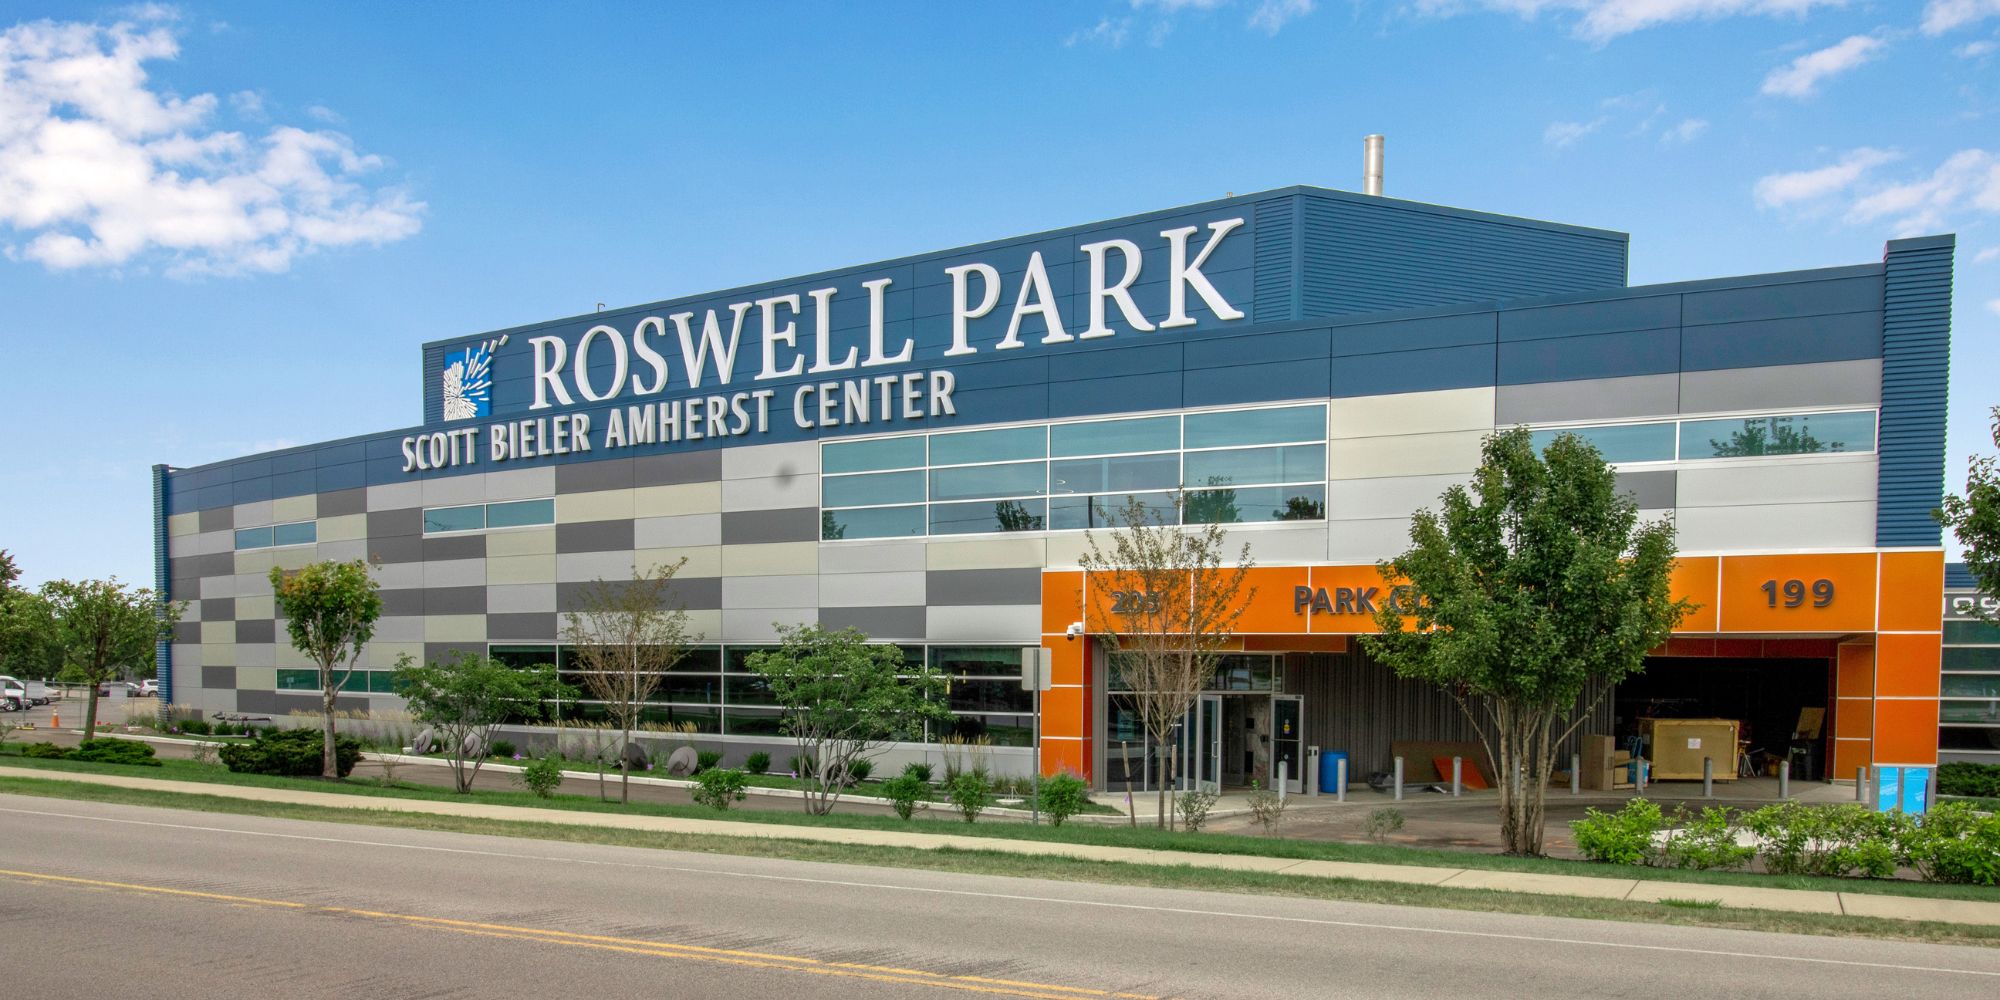 ‘A mini-hospital’: $23 million Roswell Park Scott Bieler Amherst Center nears opening